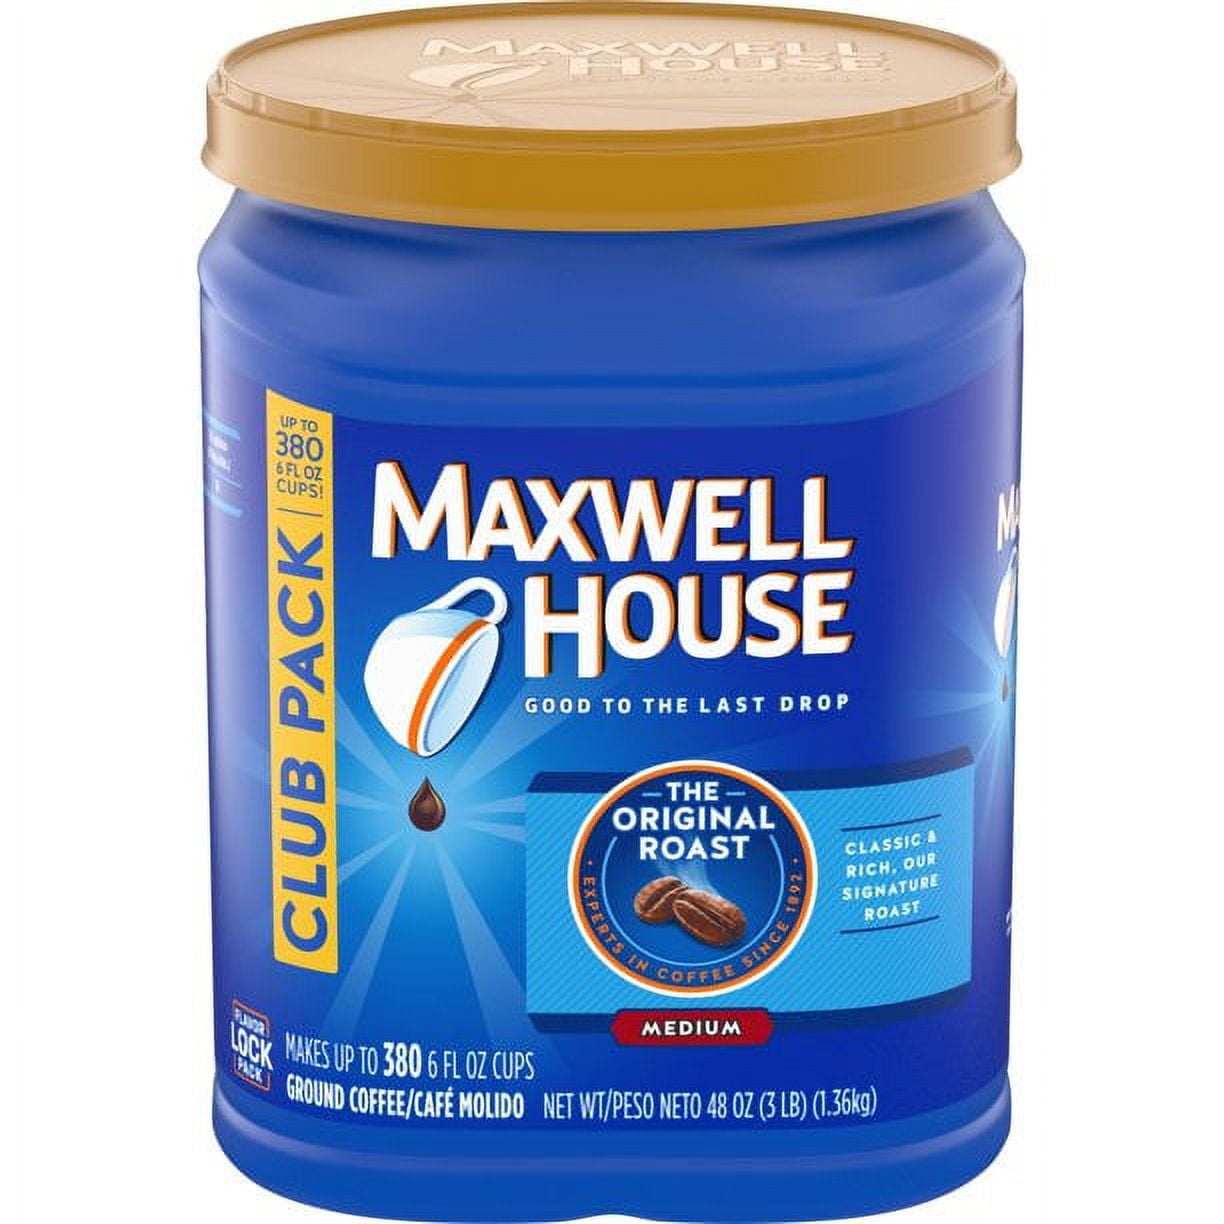 Maxwell House Original Roast Ground Coffee 48 oz.